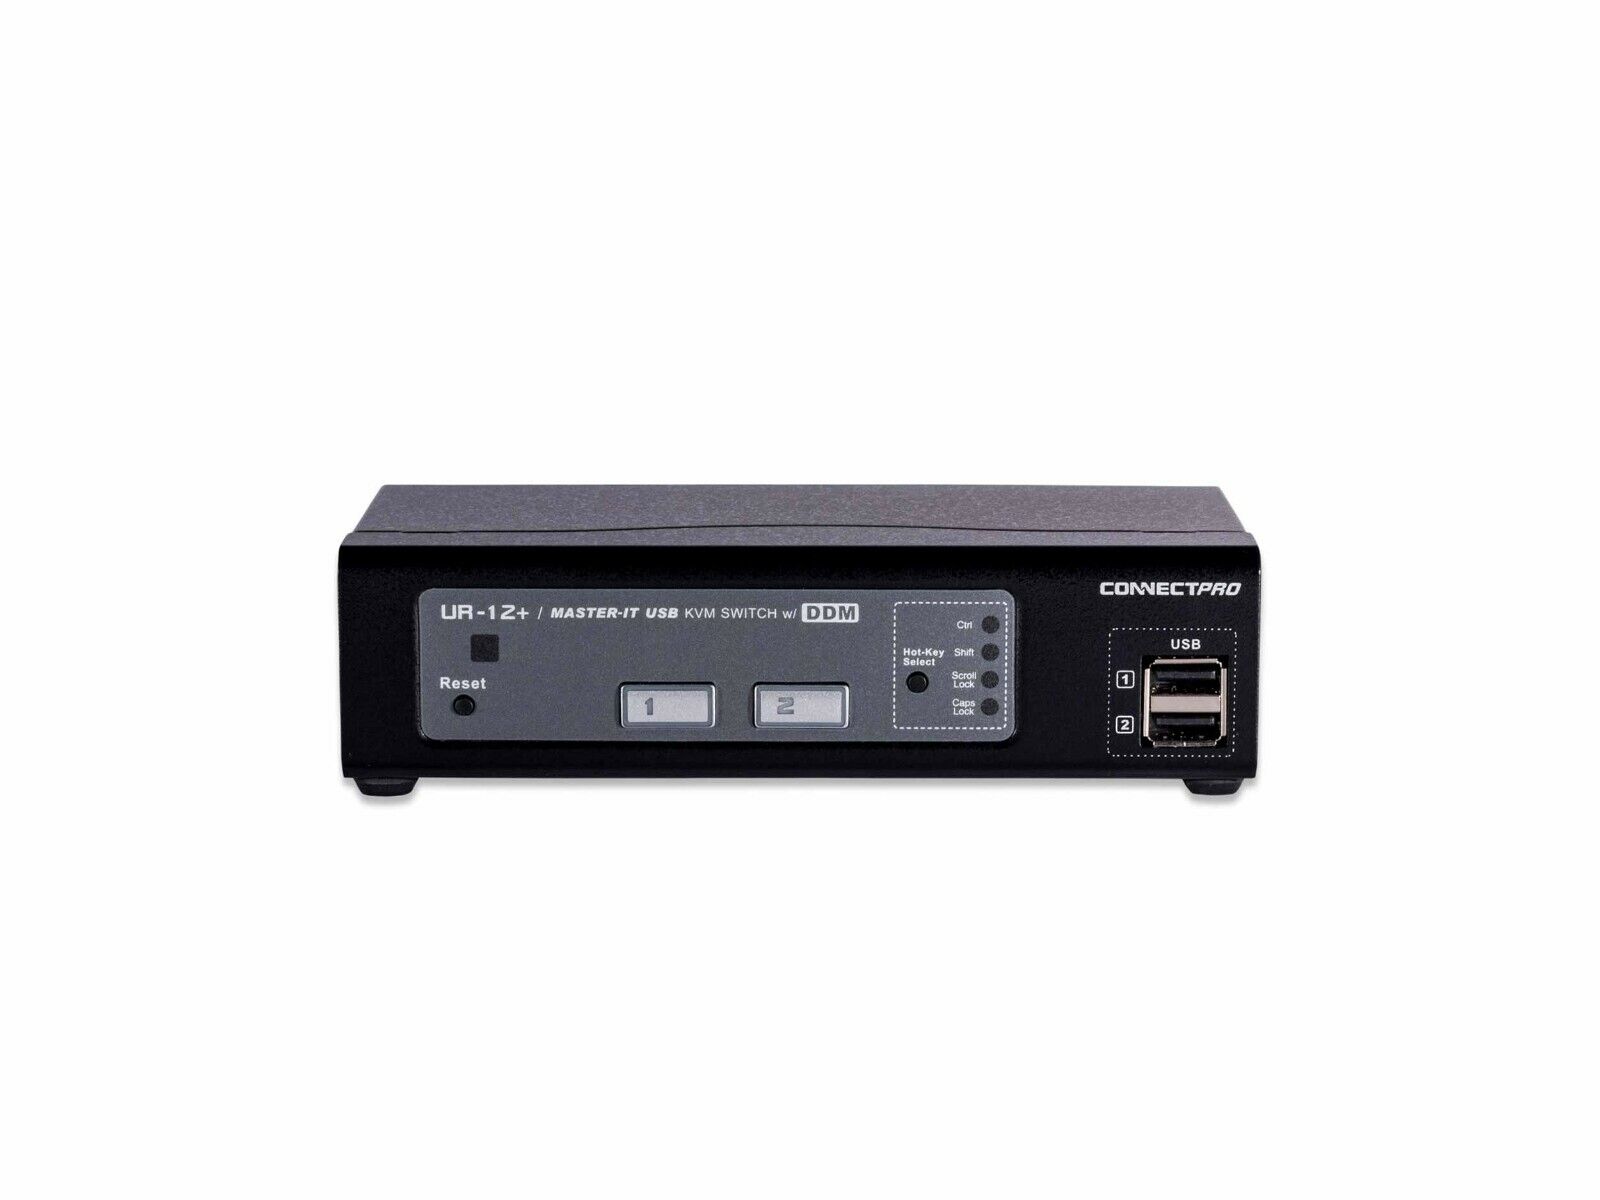 [ConnectPRO] UR-12+ - 2-port VGA USB KVM Switch w/DDM Technology  *NEW*